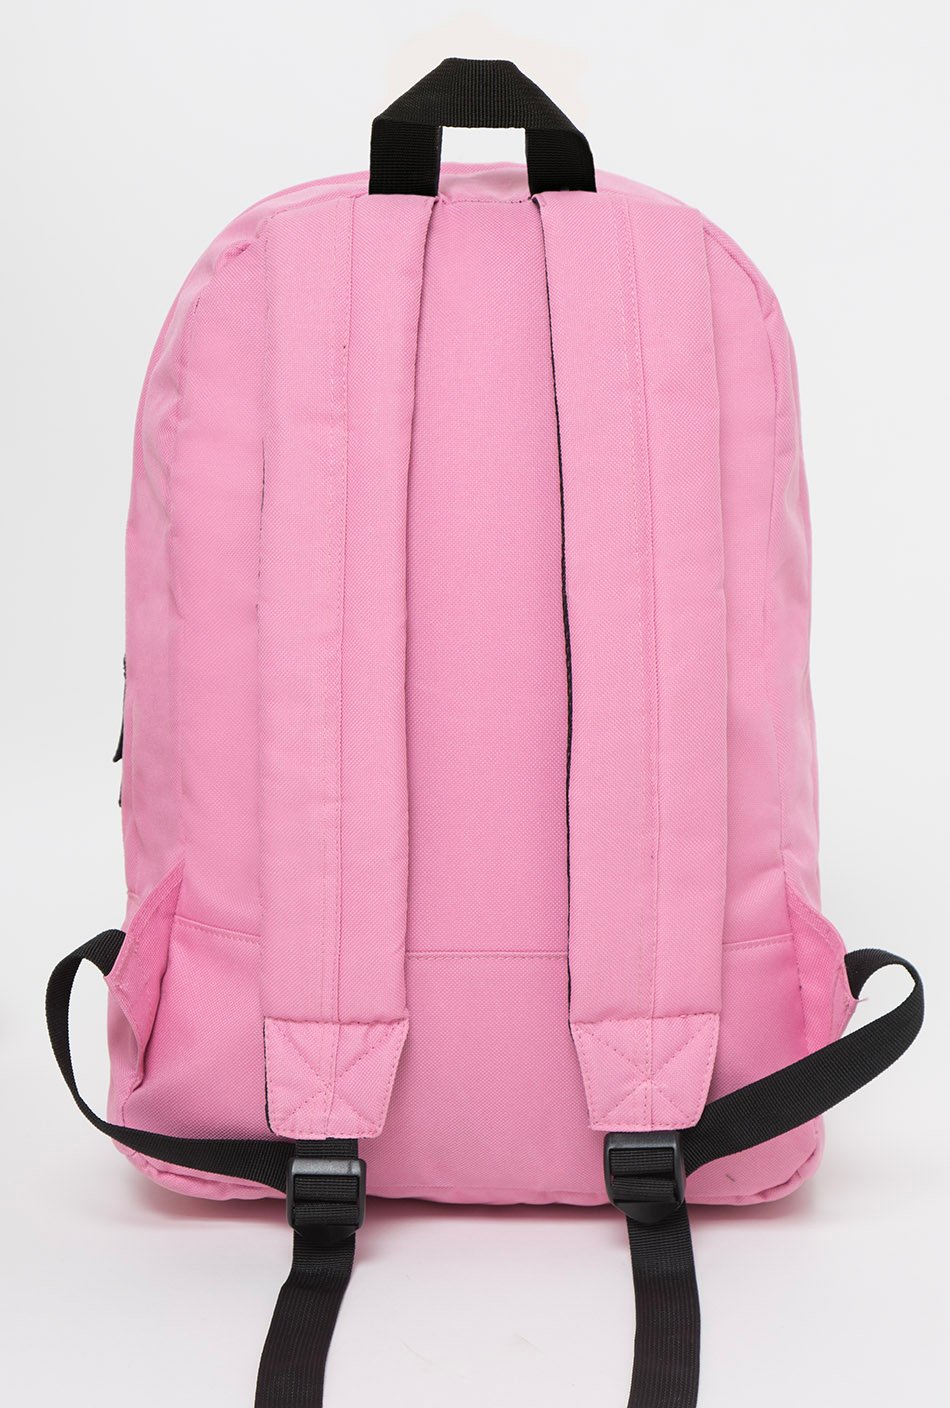 Kaotiko pink bagpack